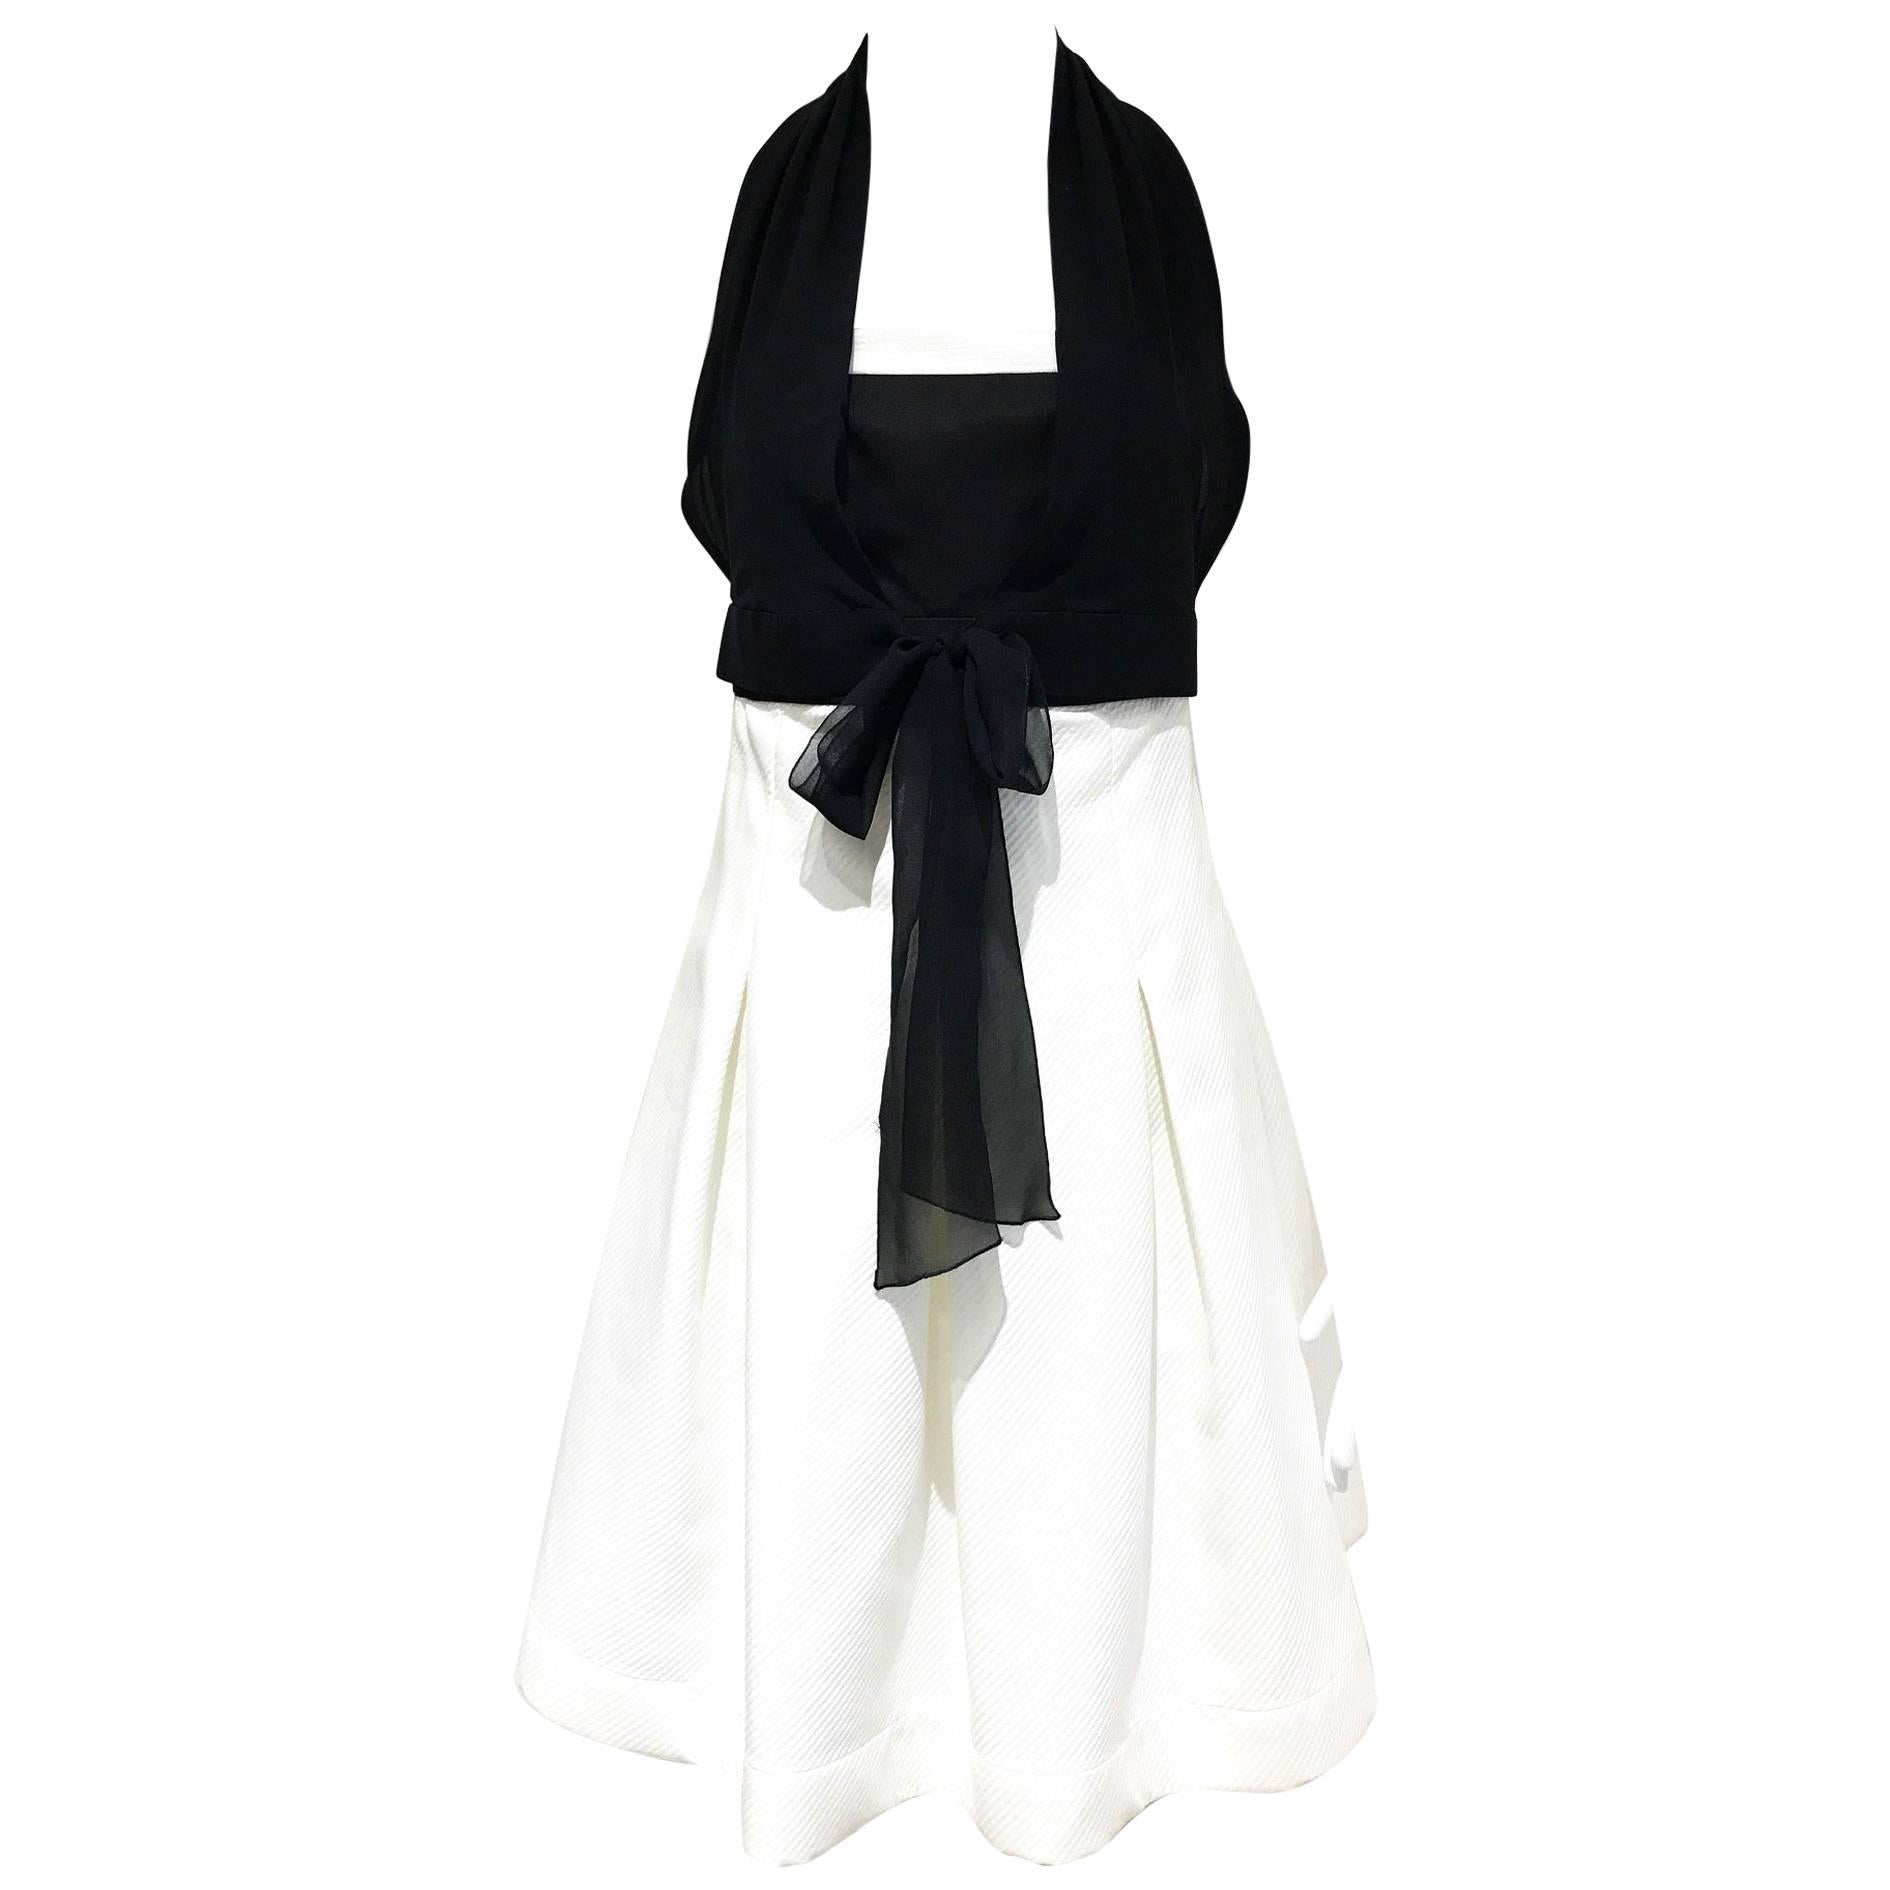 Vintage 1990s CHANEL Black and White Cotton Halter Cocktail dress